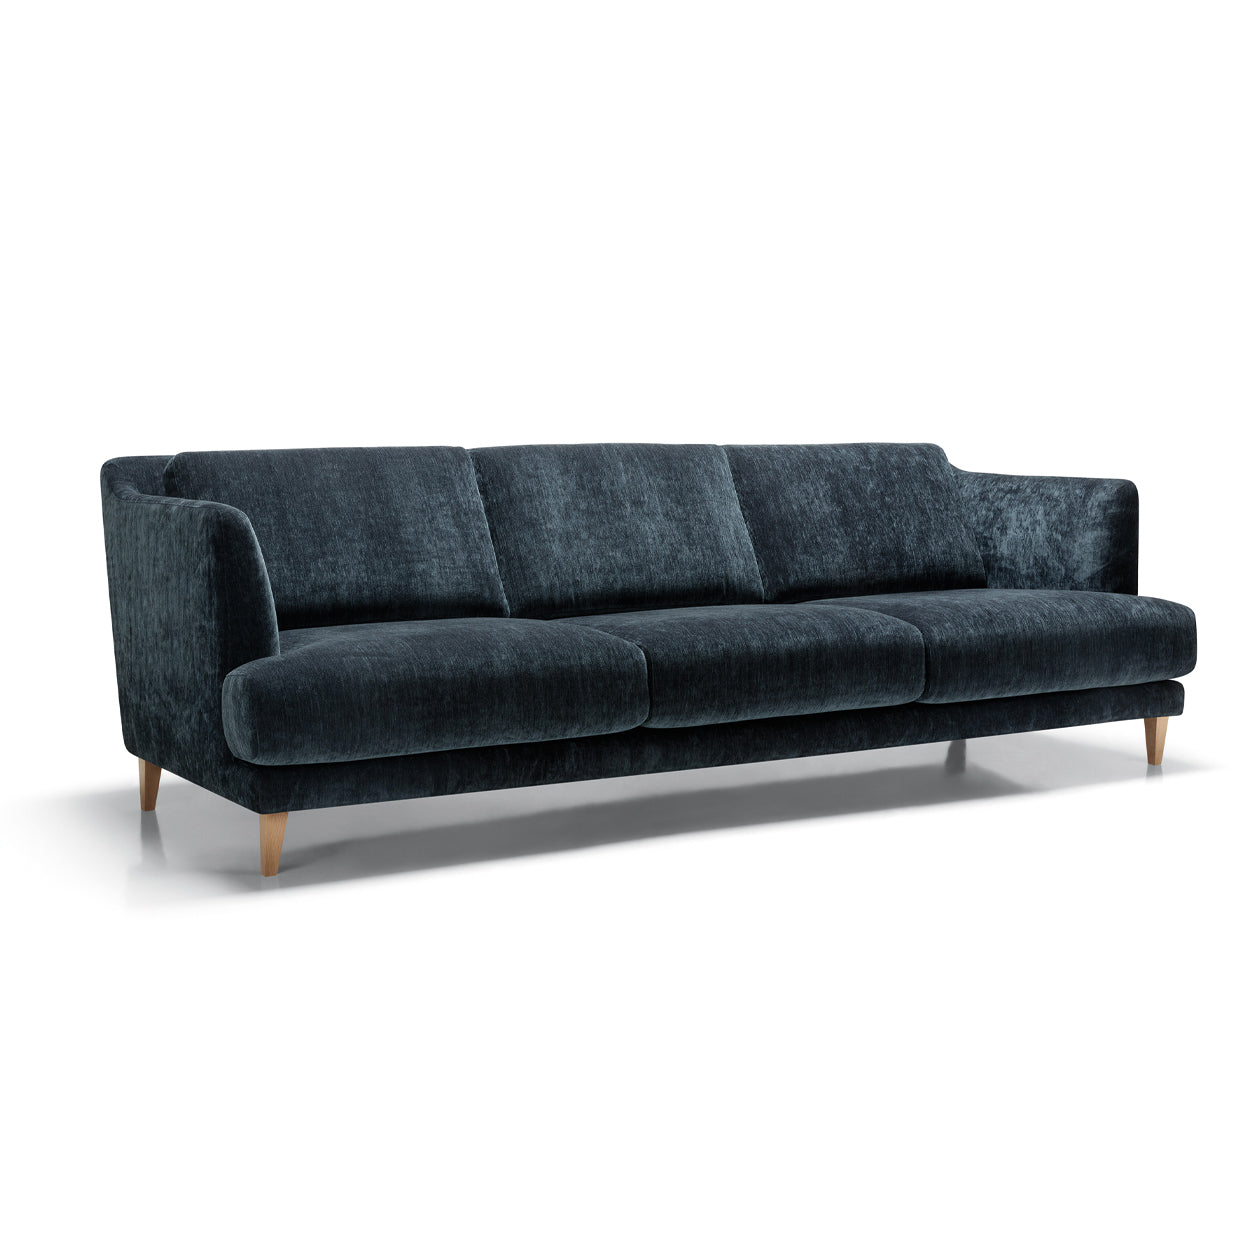 Wren Sofa - Lux - Extra Large Sofa (3 Seat Cushions)